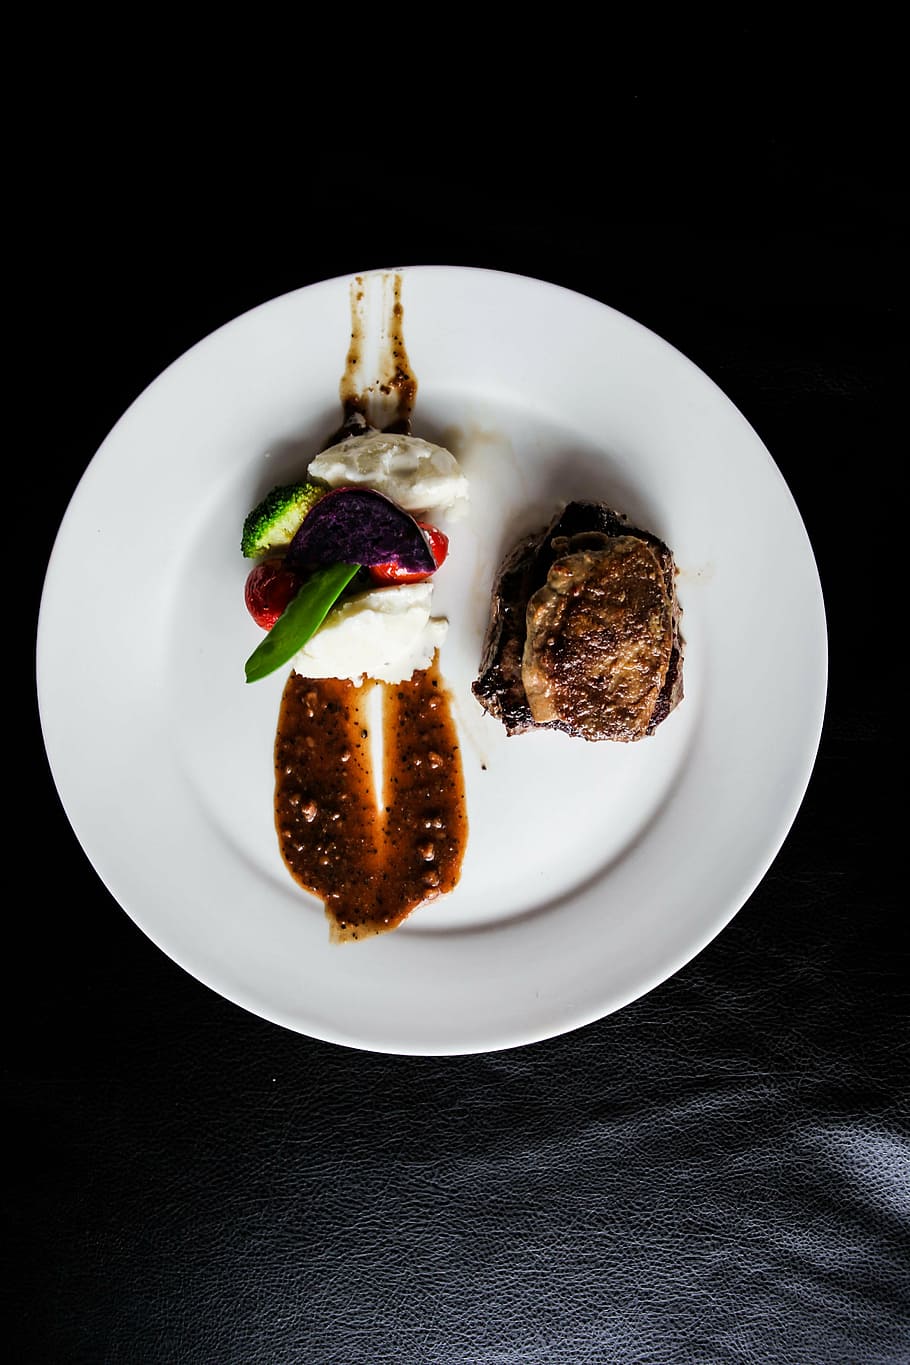 cooked, steak, vegetable dish, foie gras, black pepper, plate, food and drink, food, studio shot, black background